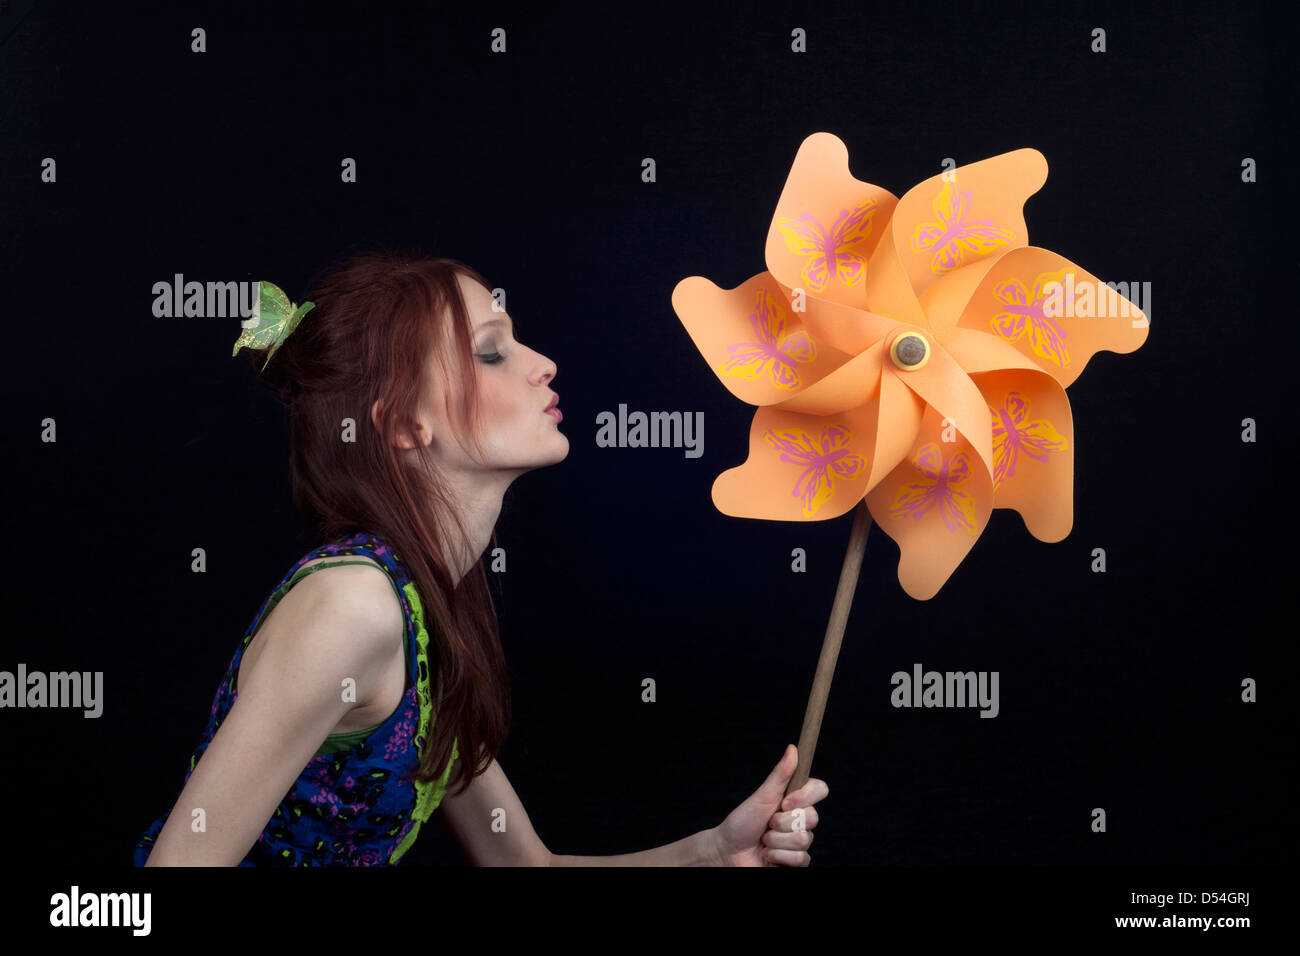 Girl with an orange pinwheel against black background Stock Photo